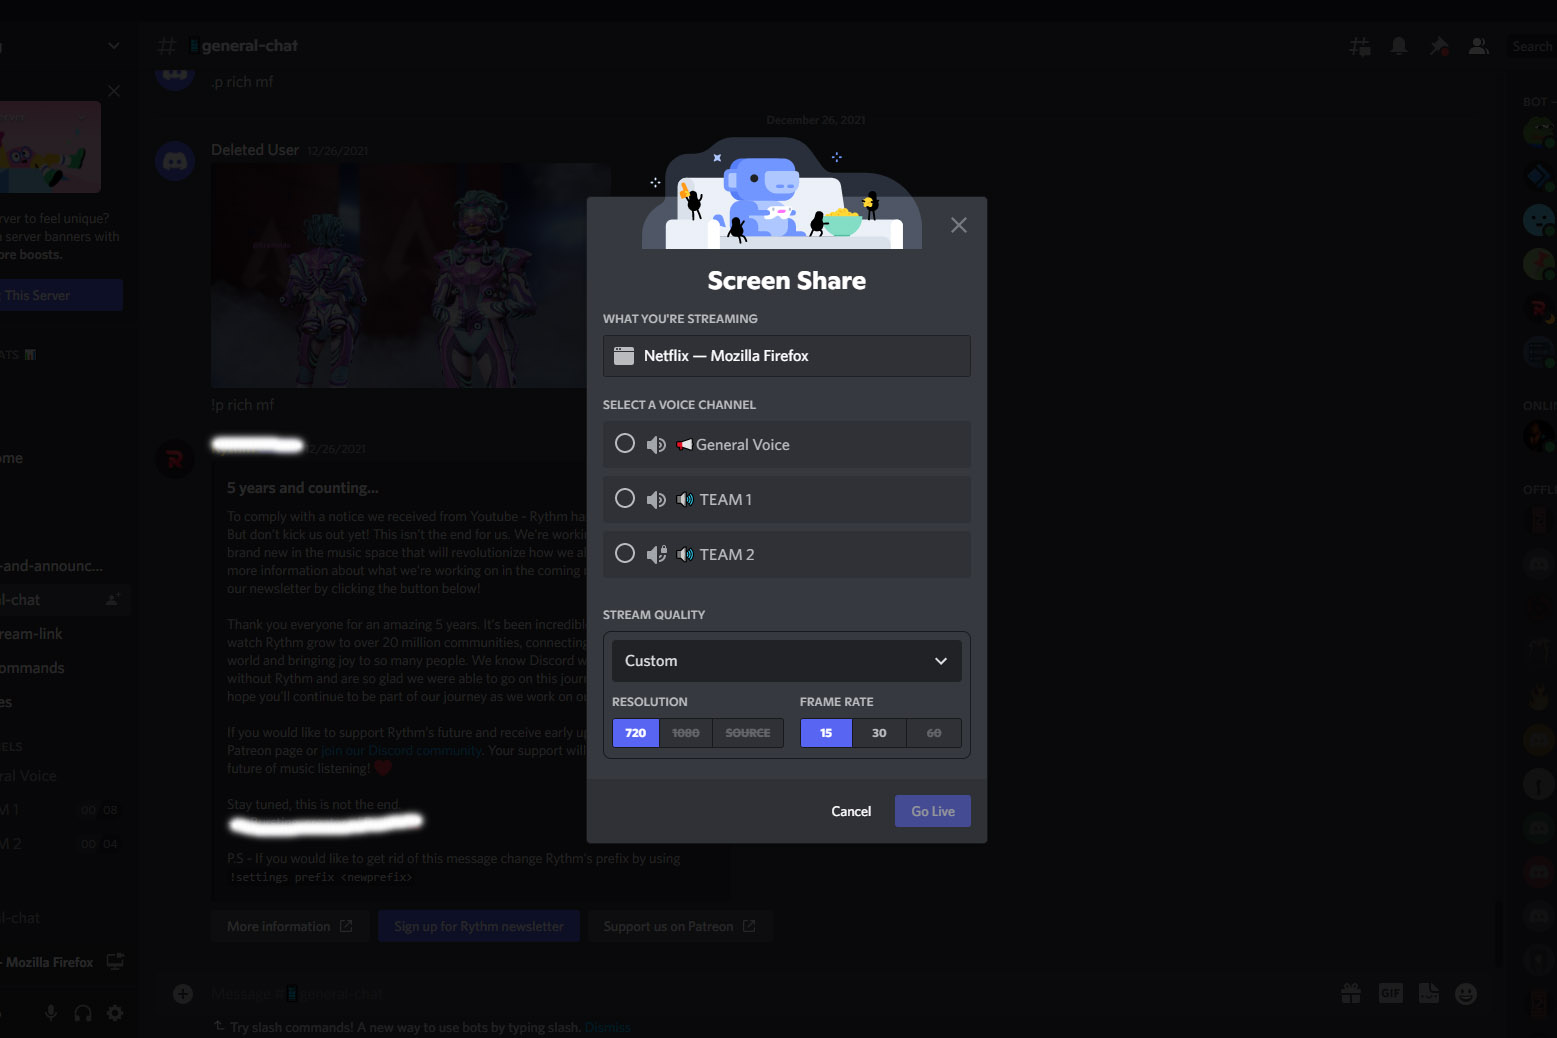 Screenshot of Discord with streaming settings menu.